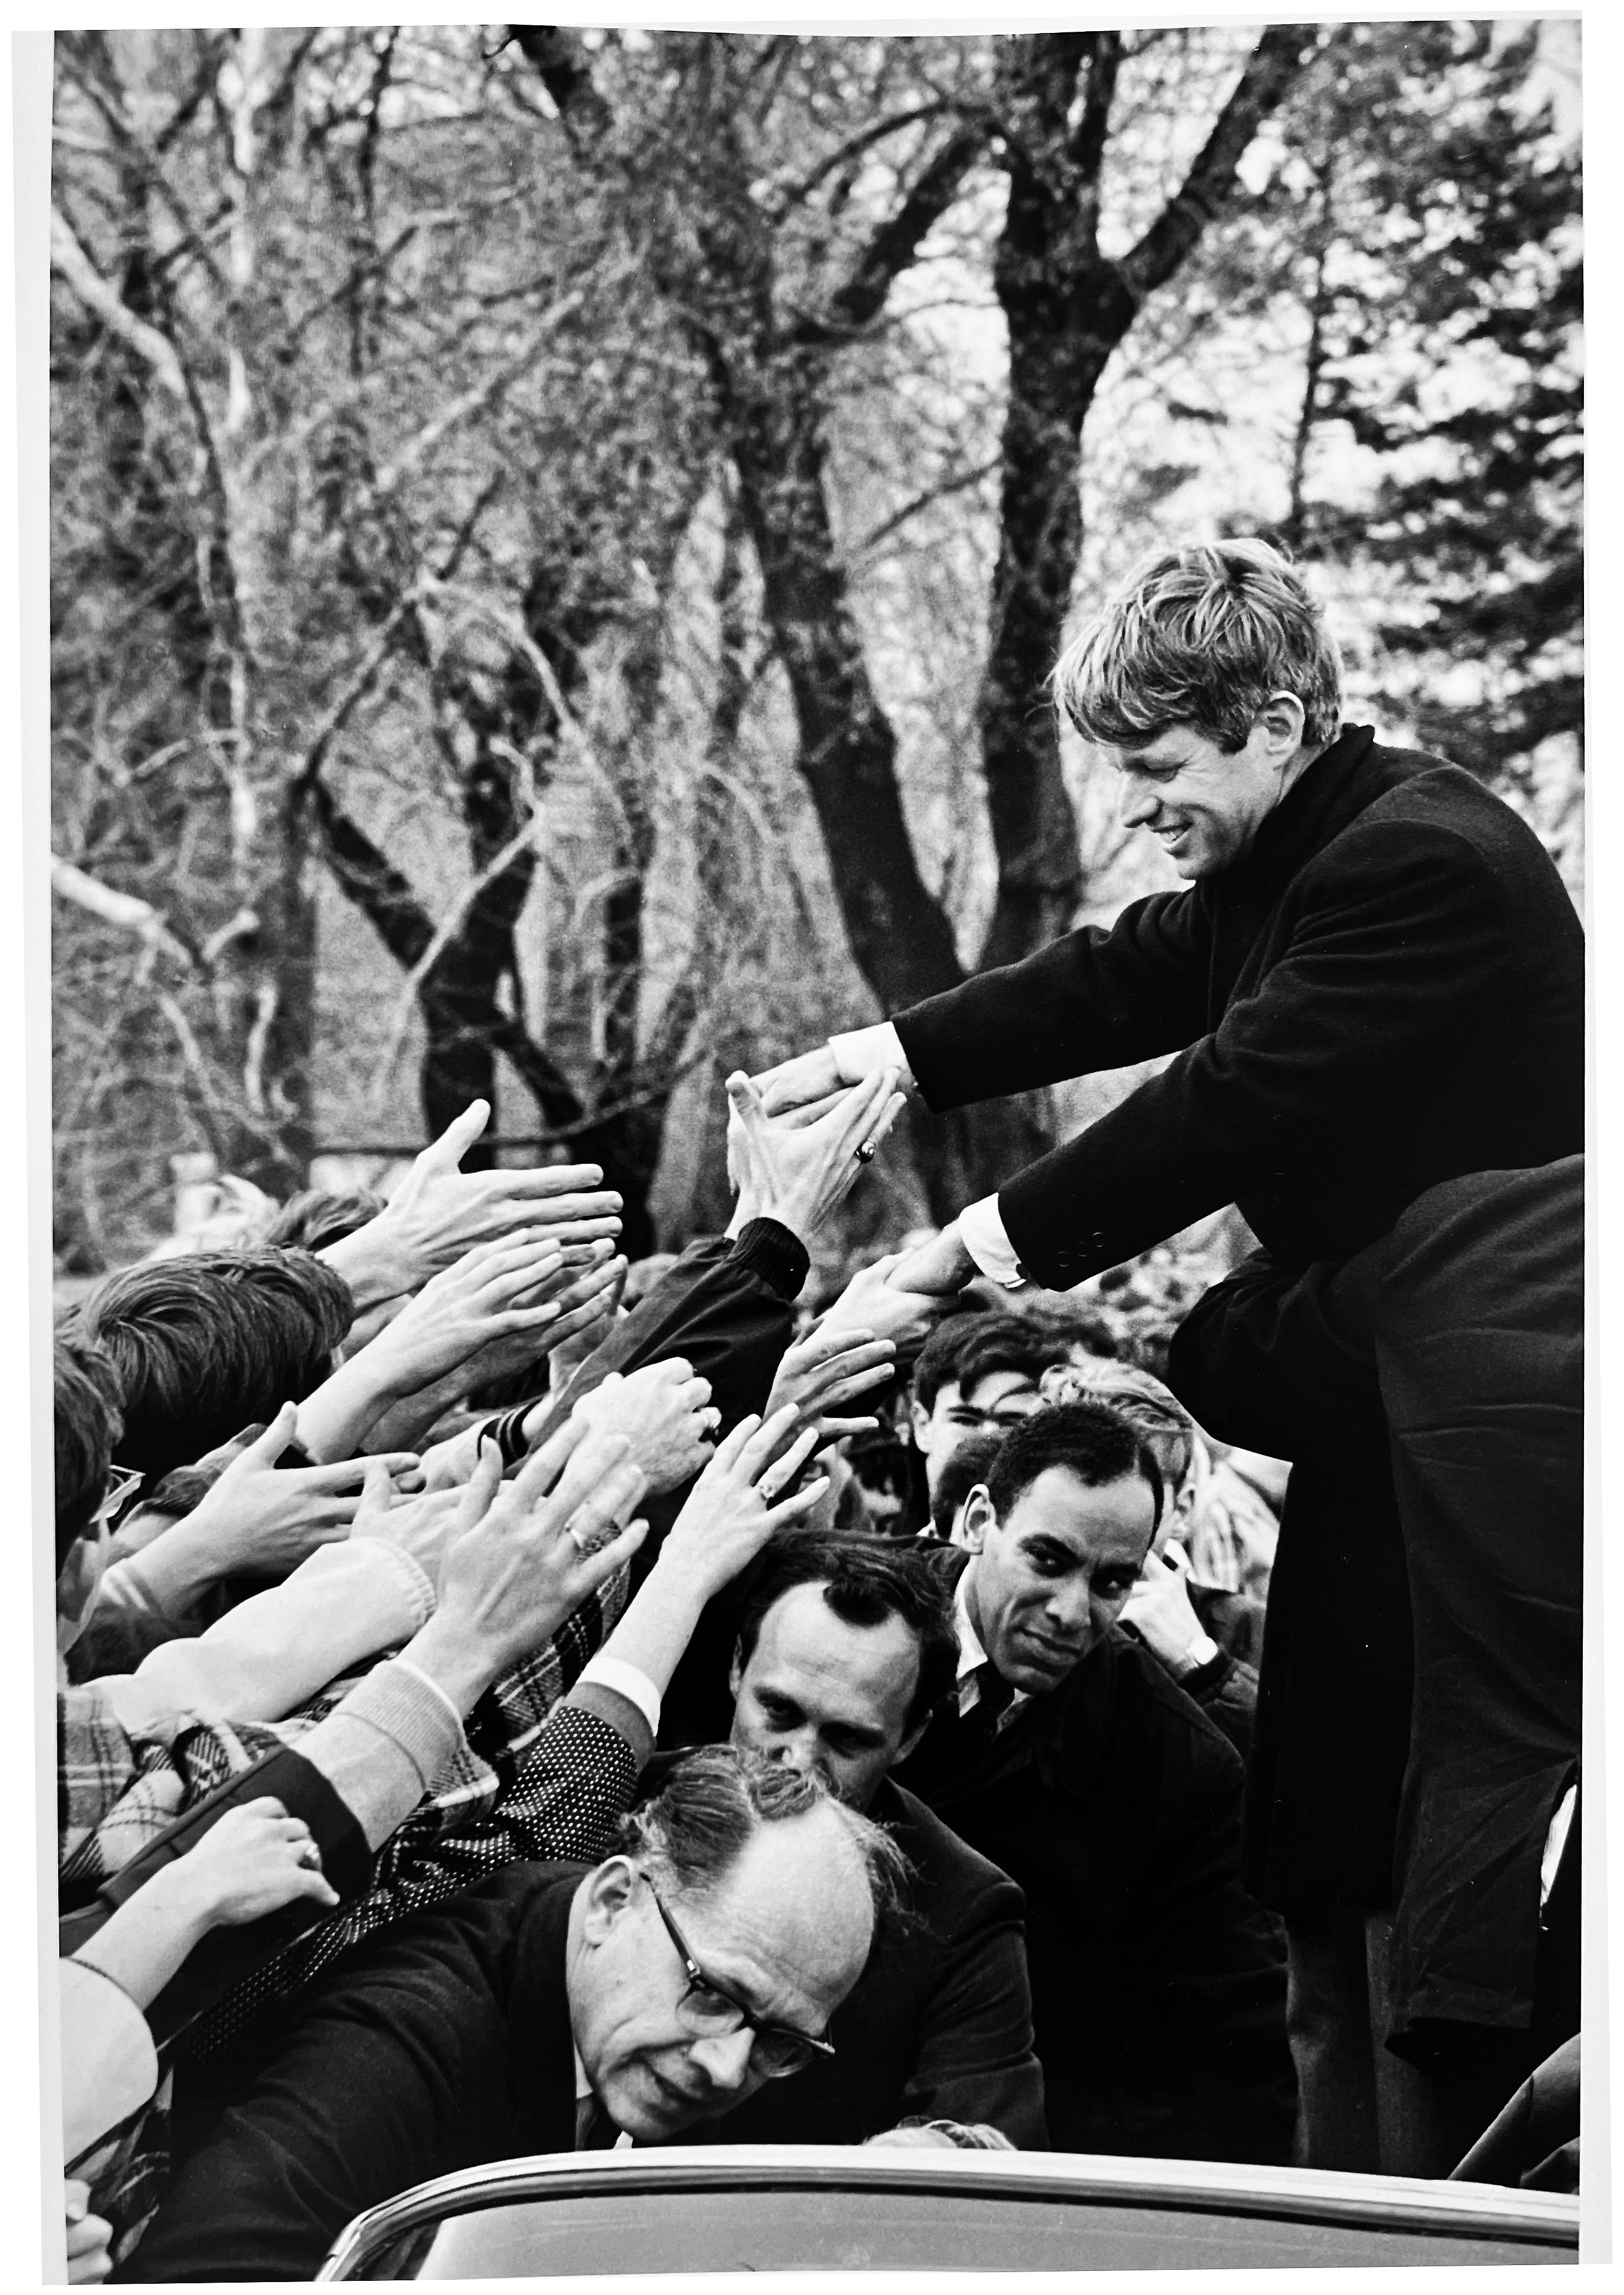 Burt Glinn Black and White Photograph – Robert Kennedy (RFK) Campaign Trail, Schwarz-Weiß-Porträtfotografie 1960s